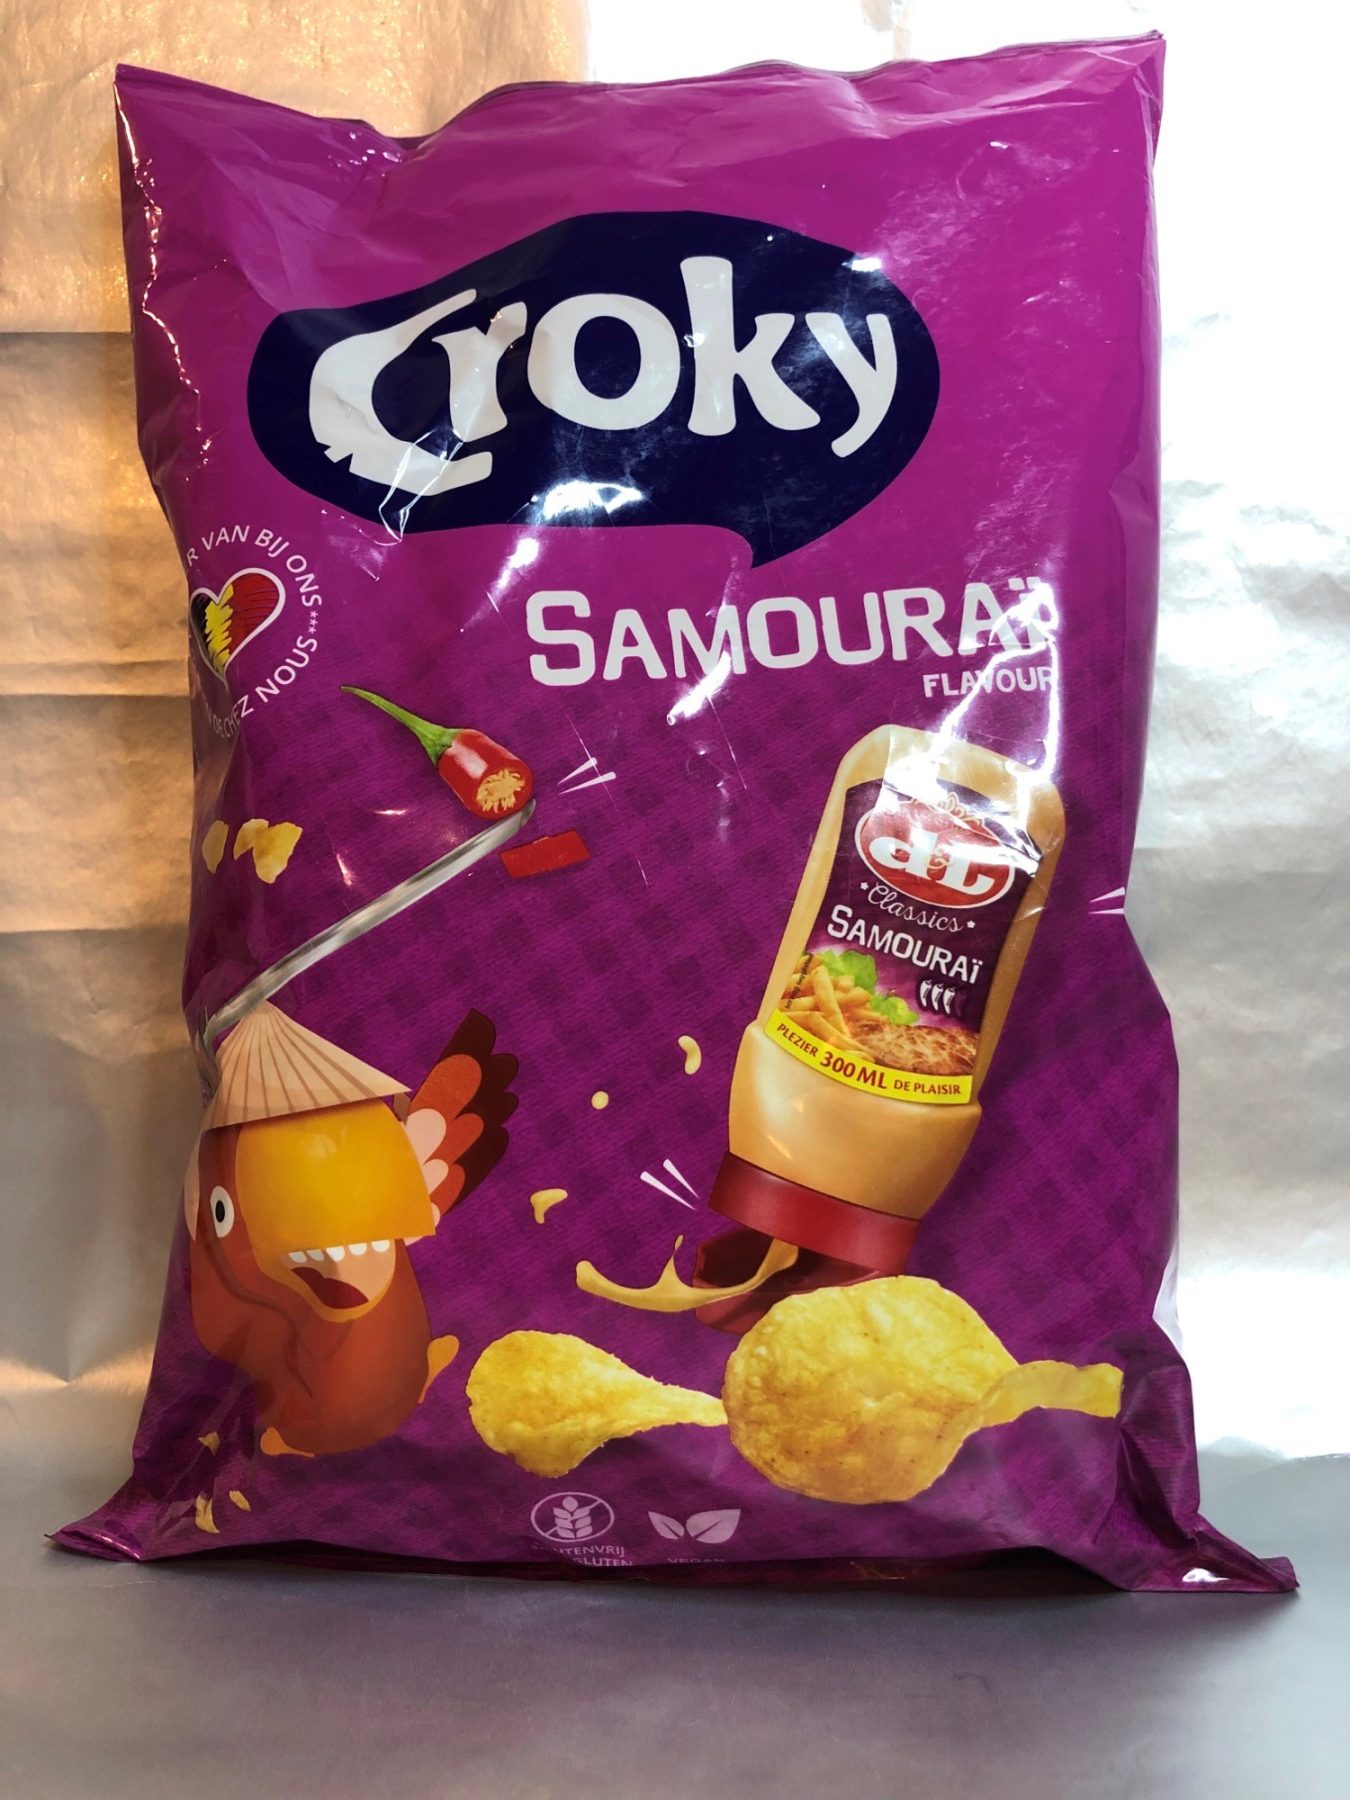 Crocky 'samourai' crisps